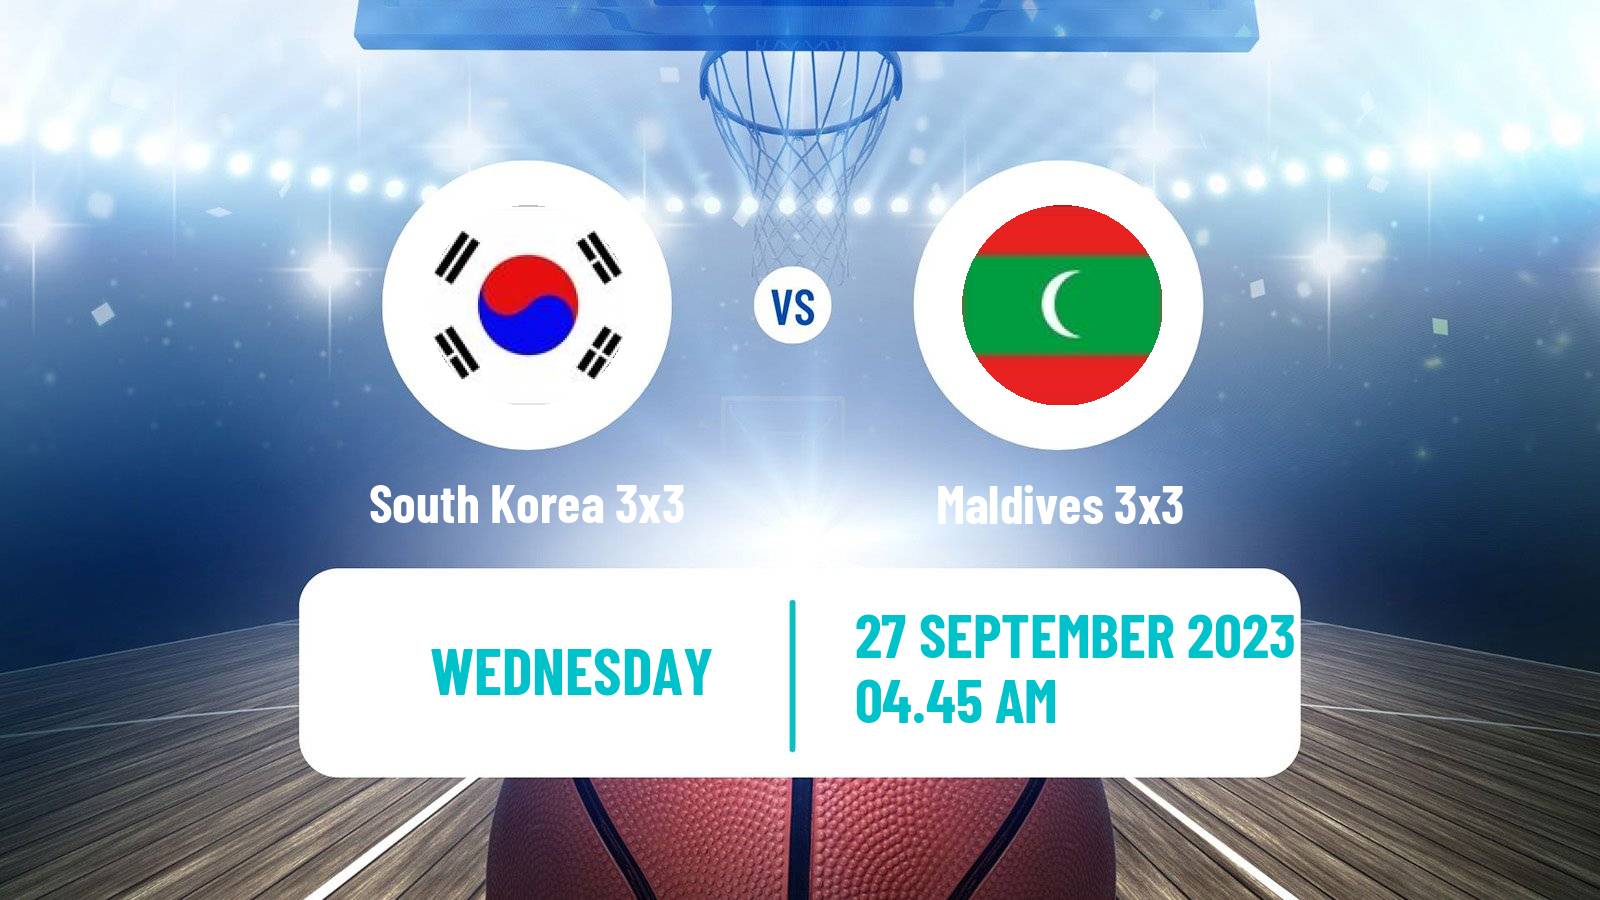 Basketball Asian Games Basketball 3x3 South Korea 3x3 - Maldives 3x3